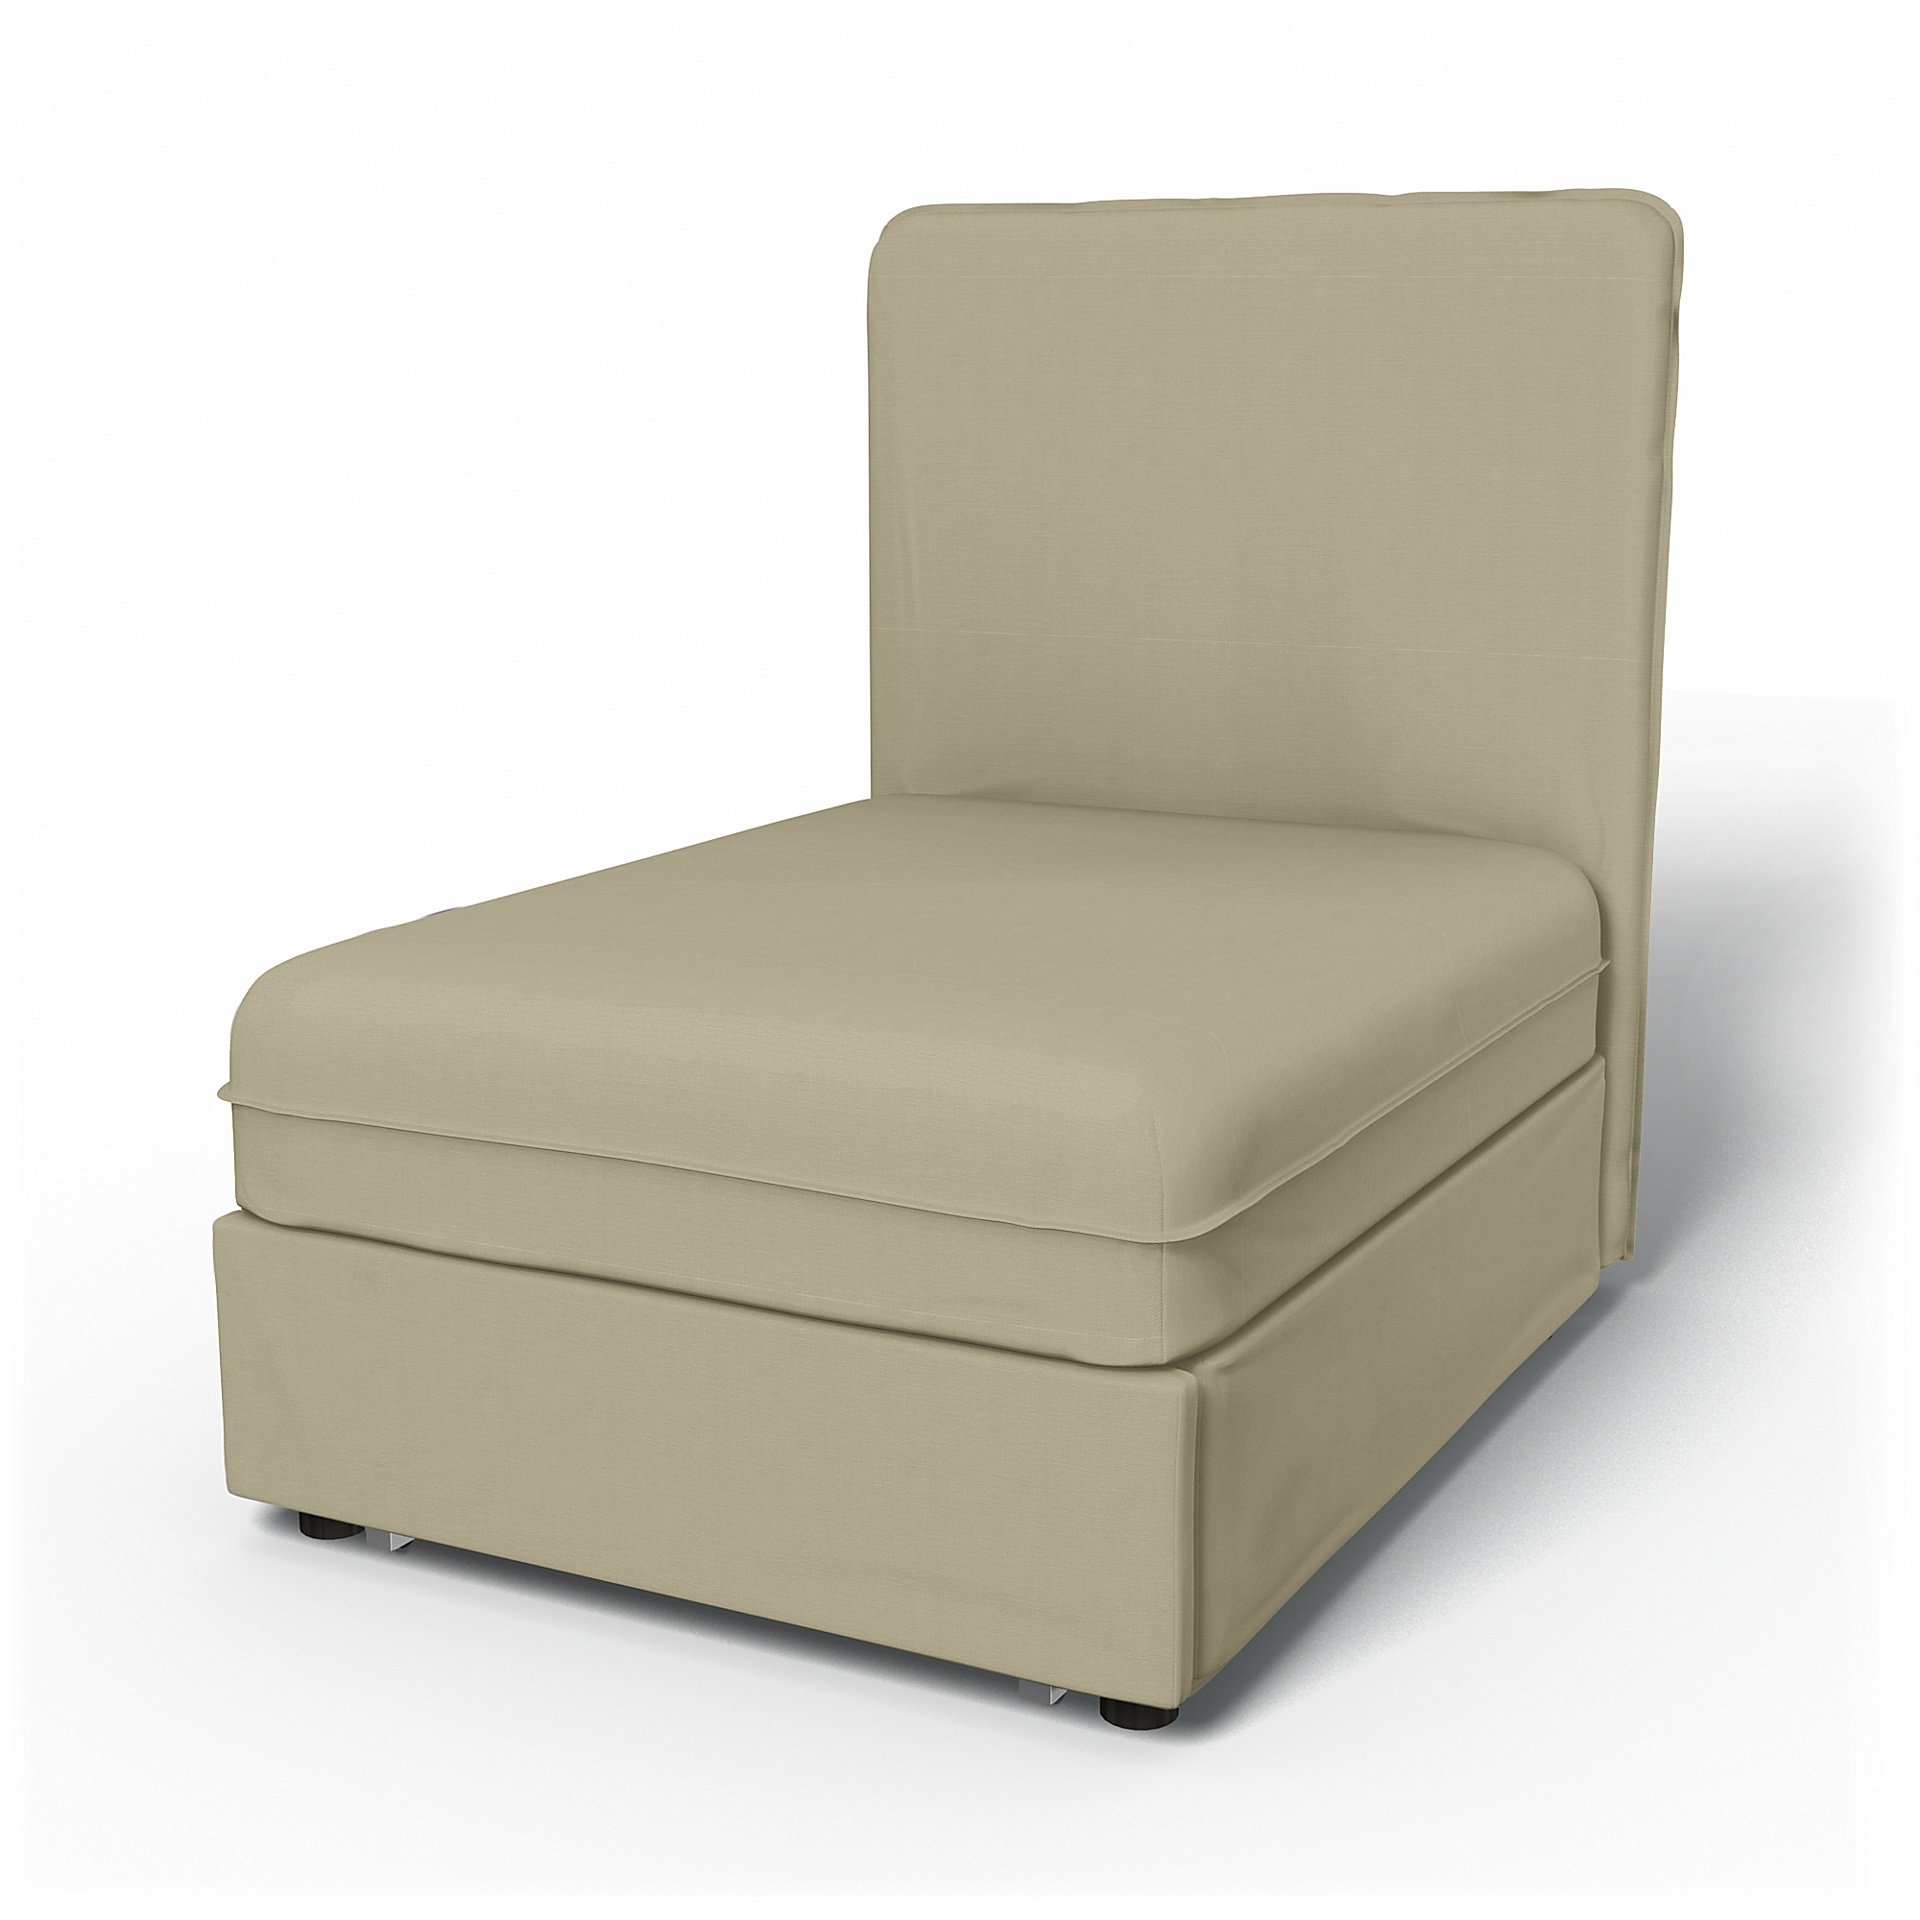 IKEA - Vallentuna Seat Module with High Back Sofa Bed Cover (80x100x46cm), Sand Beige, Cotton - Bemz